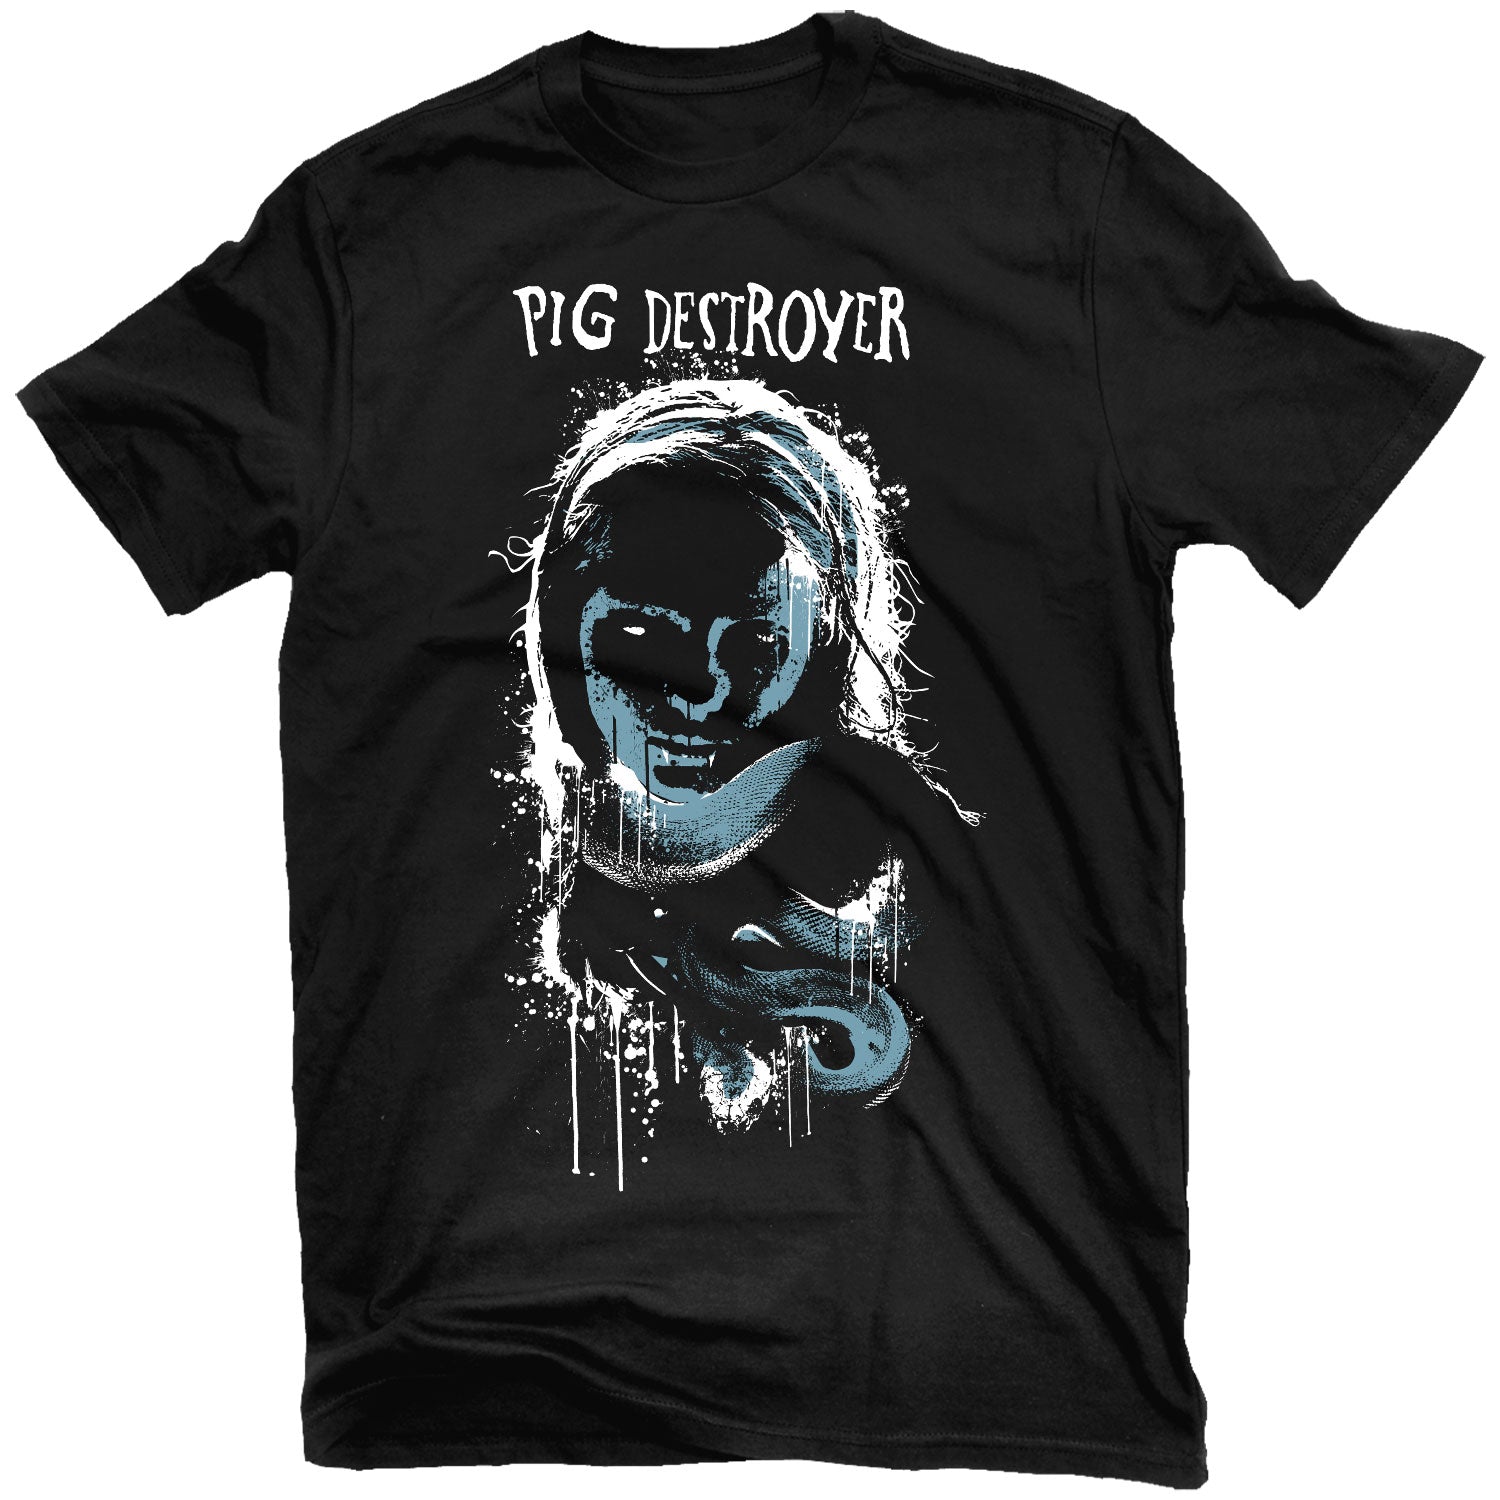 Pig Destroyer "Venom" T-Shirt